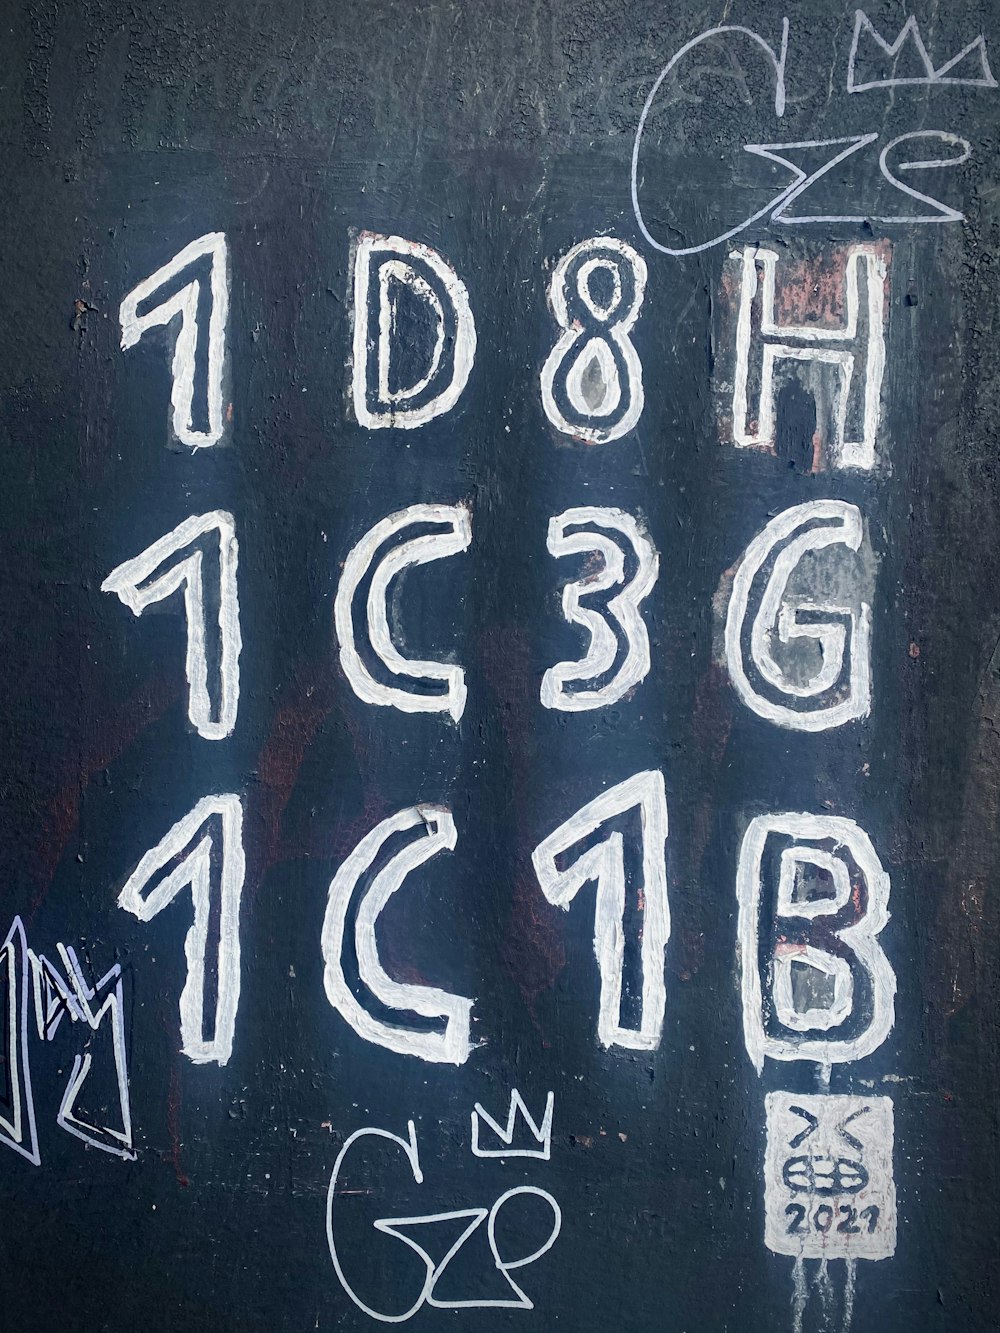 a blackboard with white writing